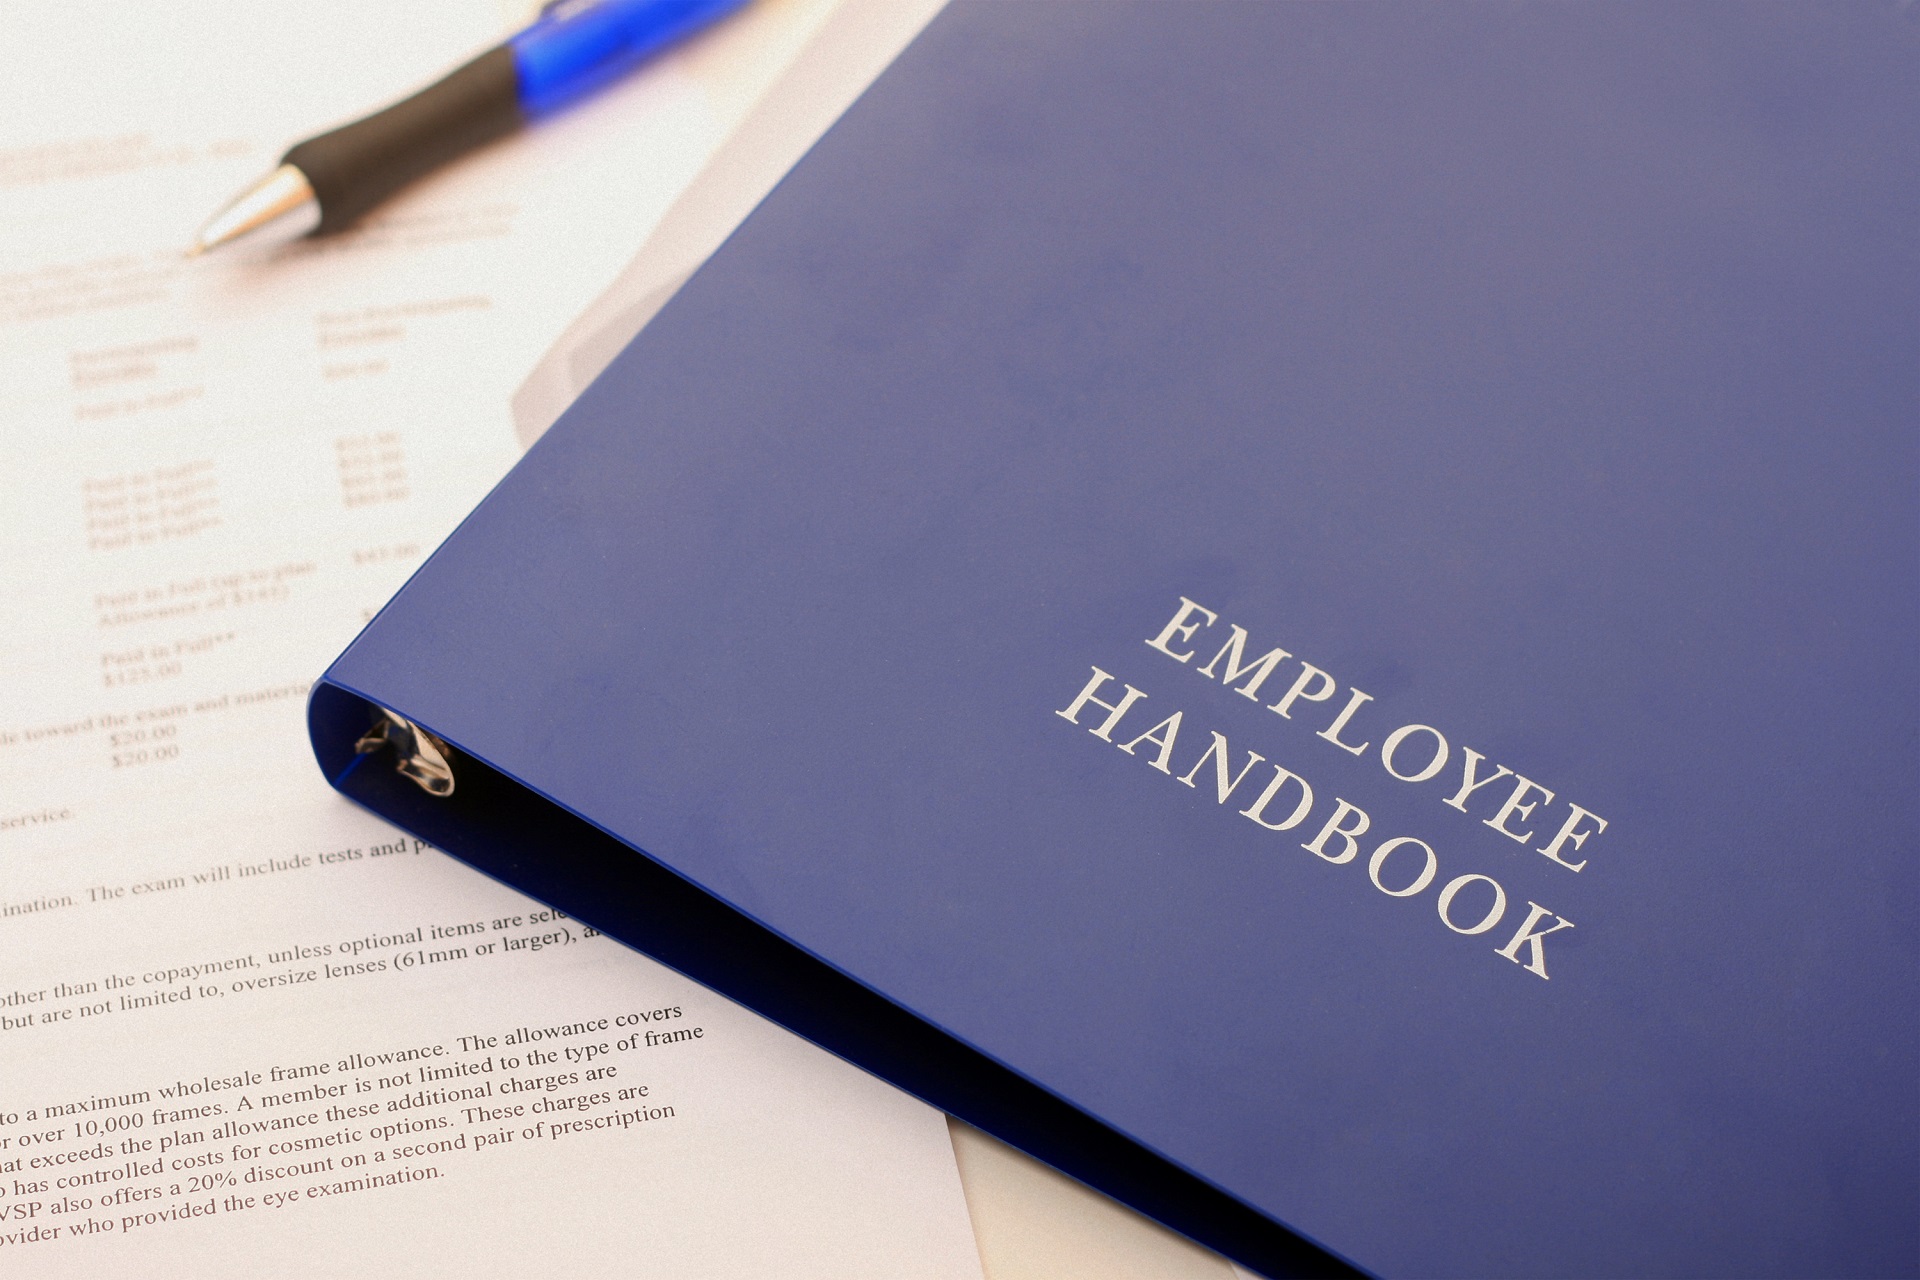 Employee handbook - Choose Your Words Carefully When Drafting Social Media Policies